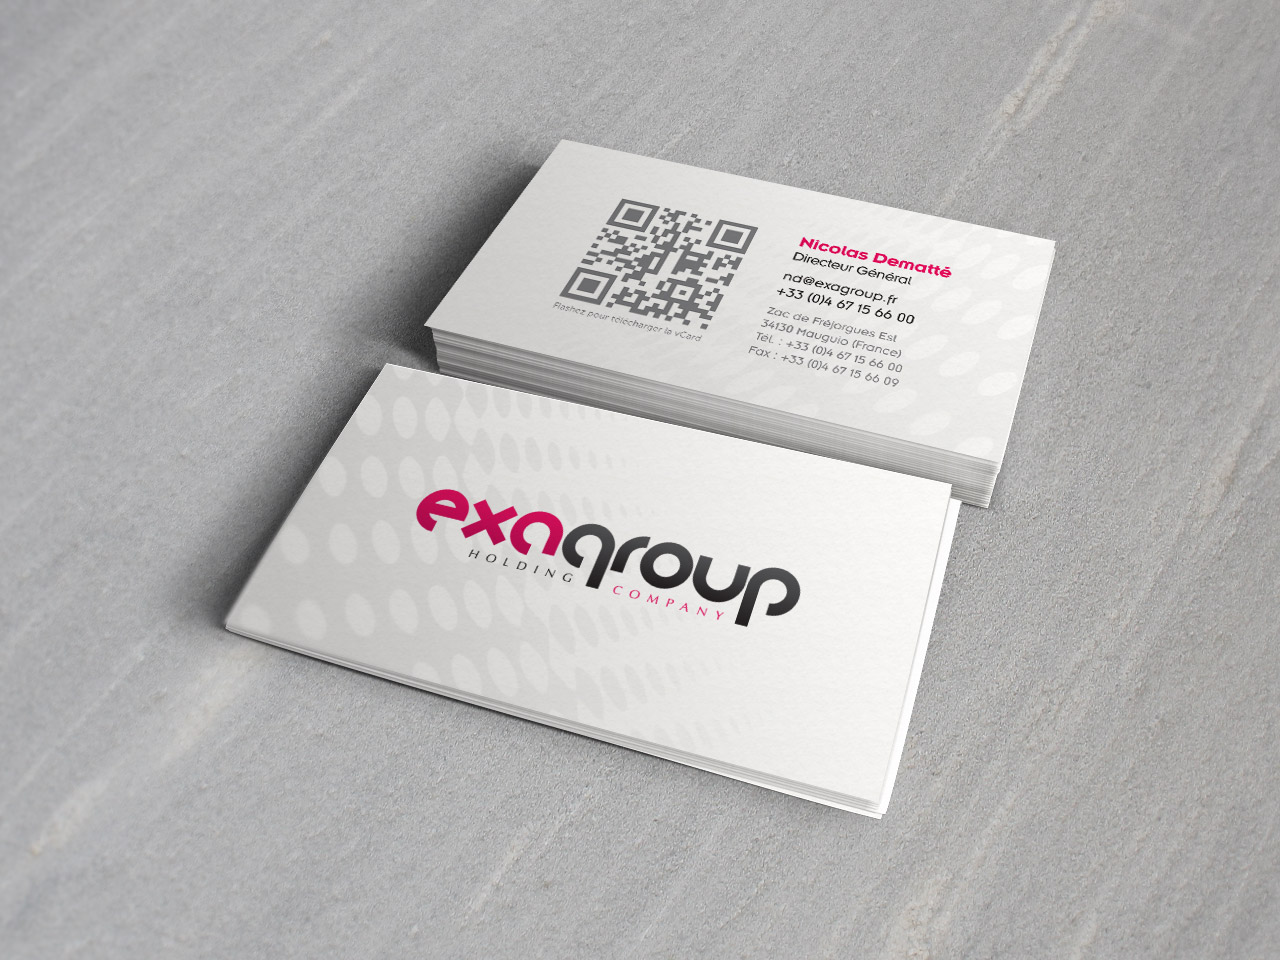 exagroup-logo-identite-visuelle-carte-creation-communication-caconcept-alexis-cretin-graphiste